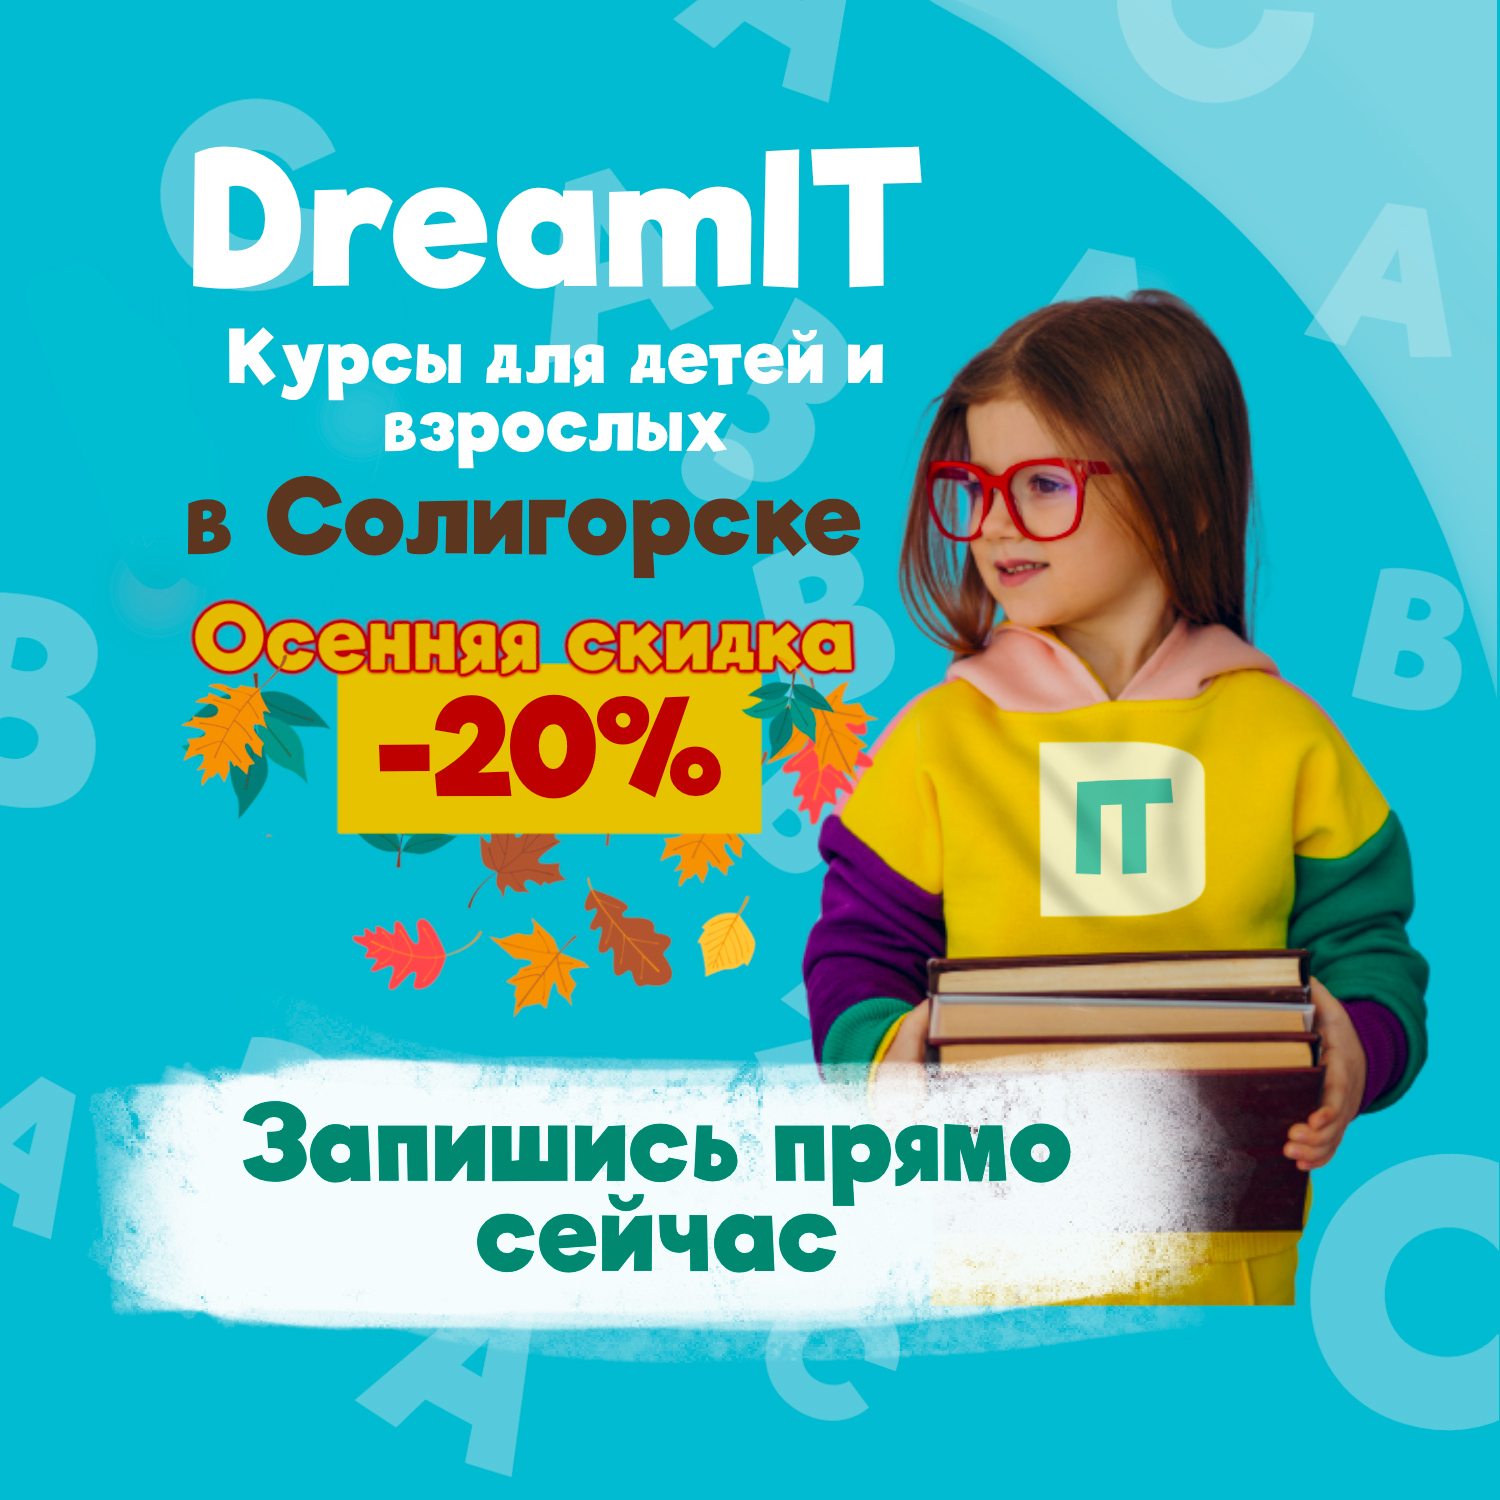 DreamIT Солигорск